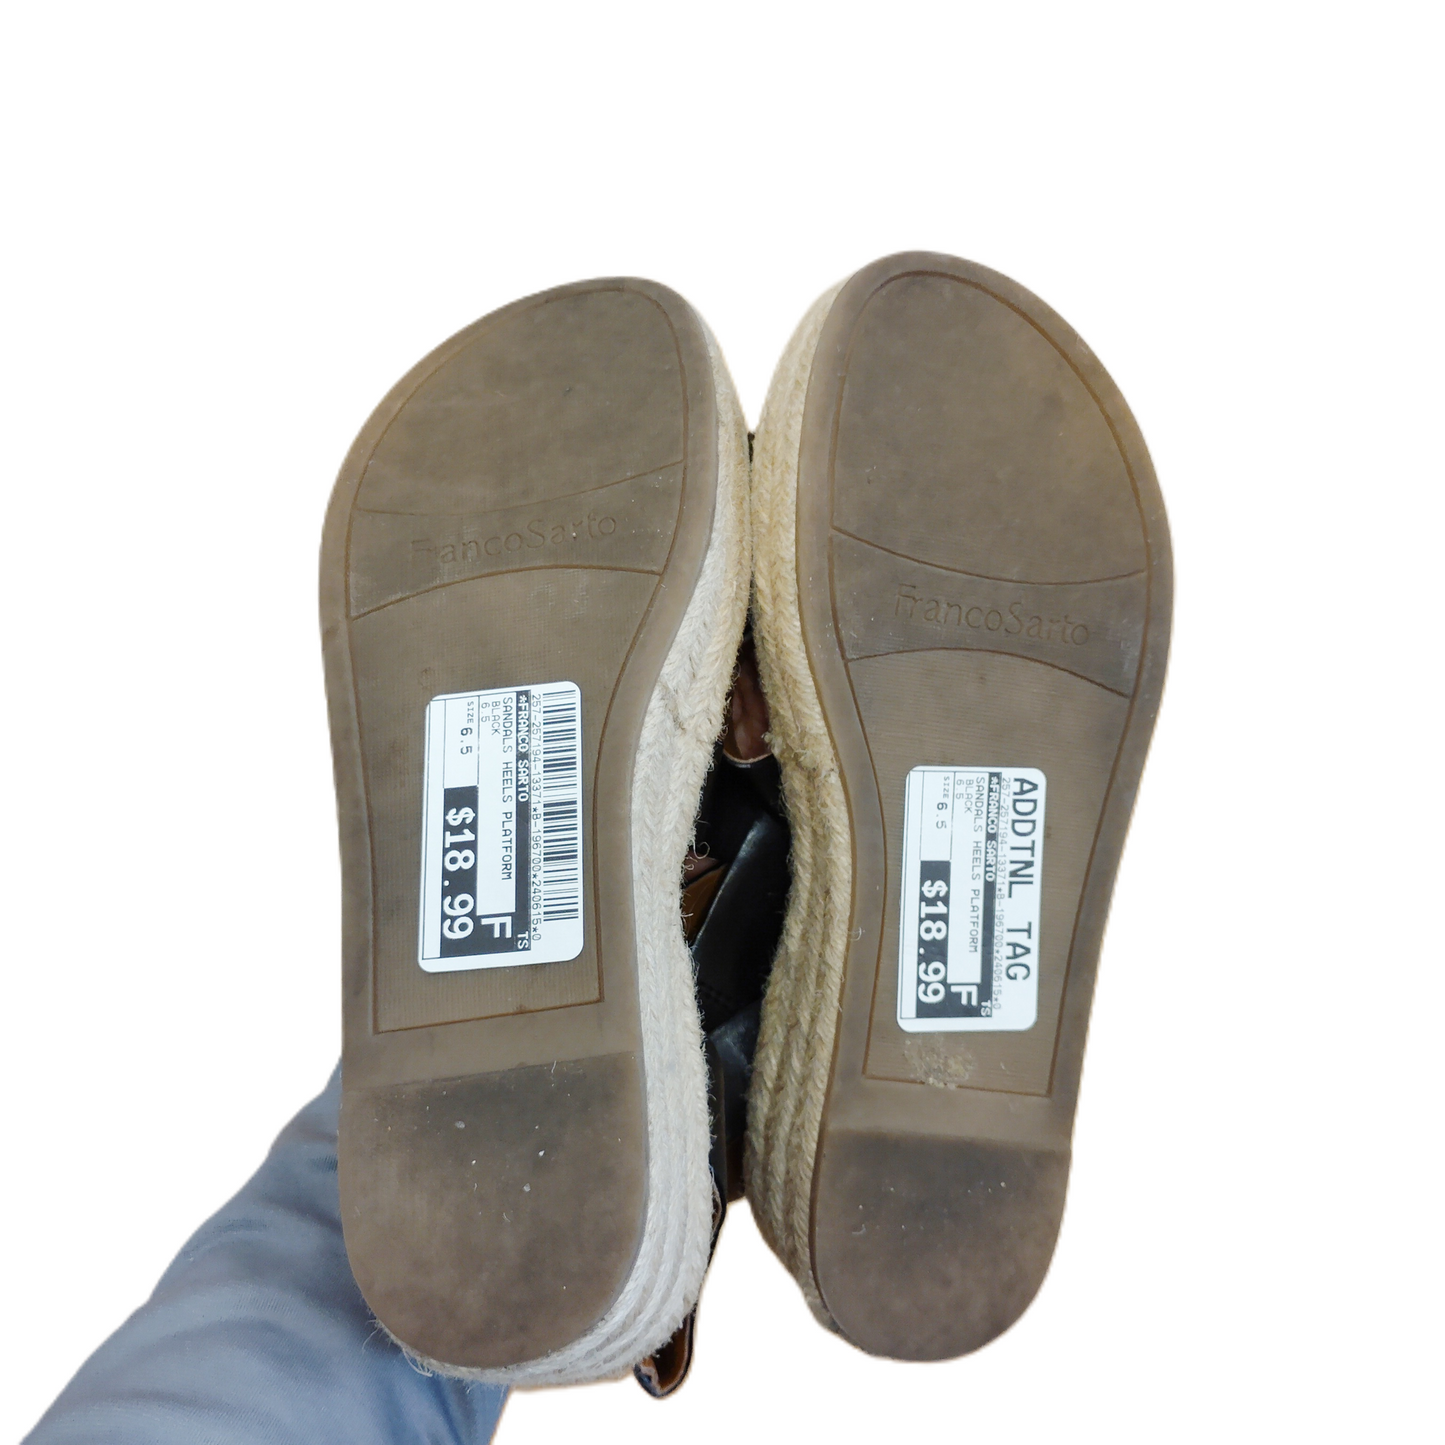 Black Sandals Heels Platform By Franco Sarto, Size: 6.5